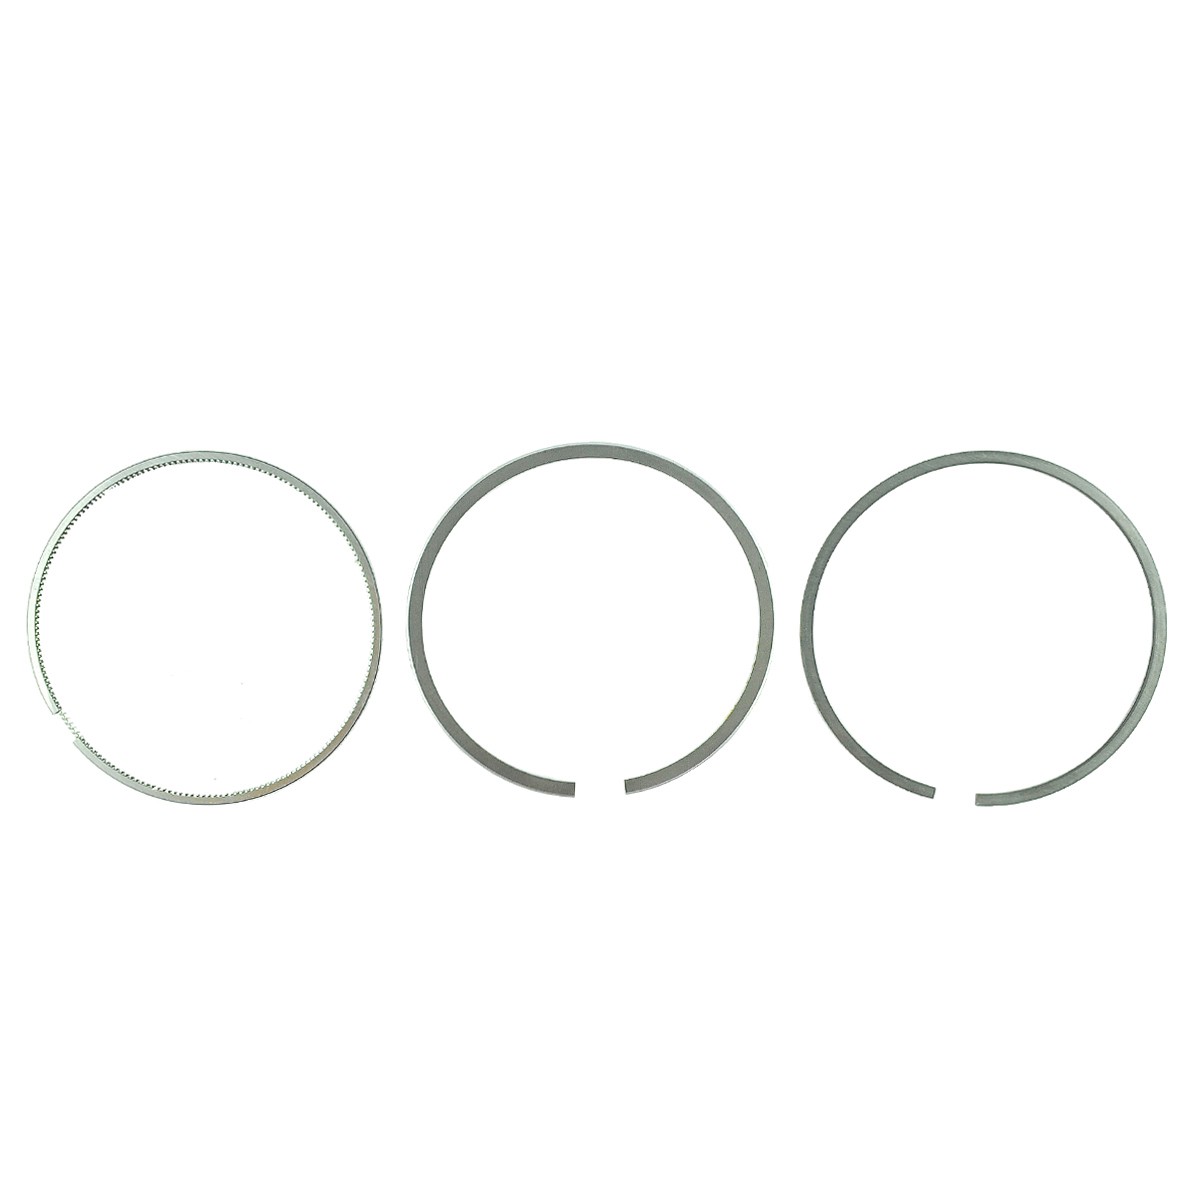 Piston rings / Ø 82 mm / 2 x 2 x 4 mm / STD / Yanmar 3TN82/3TNB82 / Yanmar F20/FX20 / 129537-22500 / 6-26-100-47